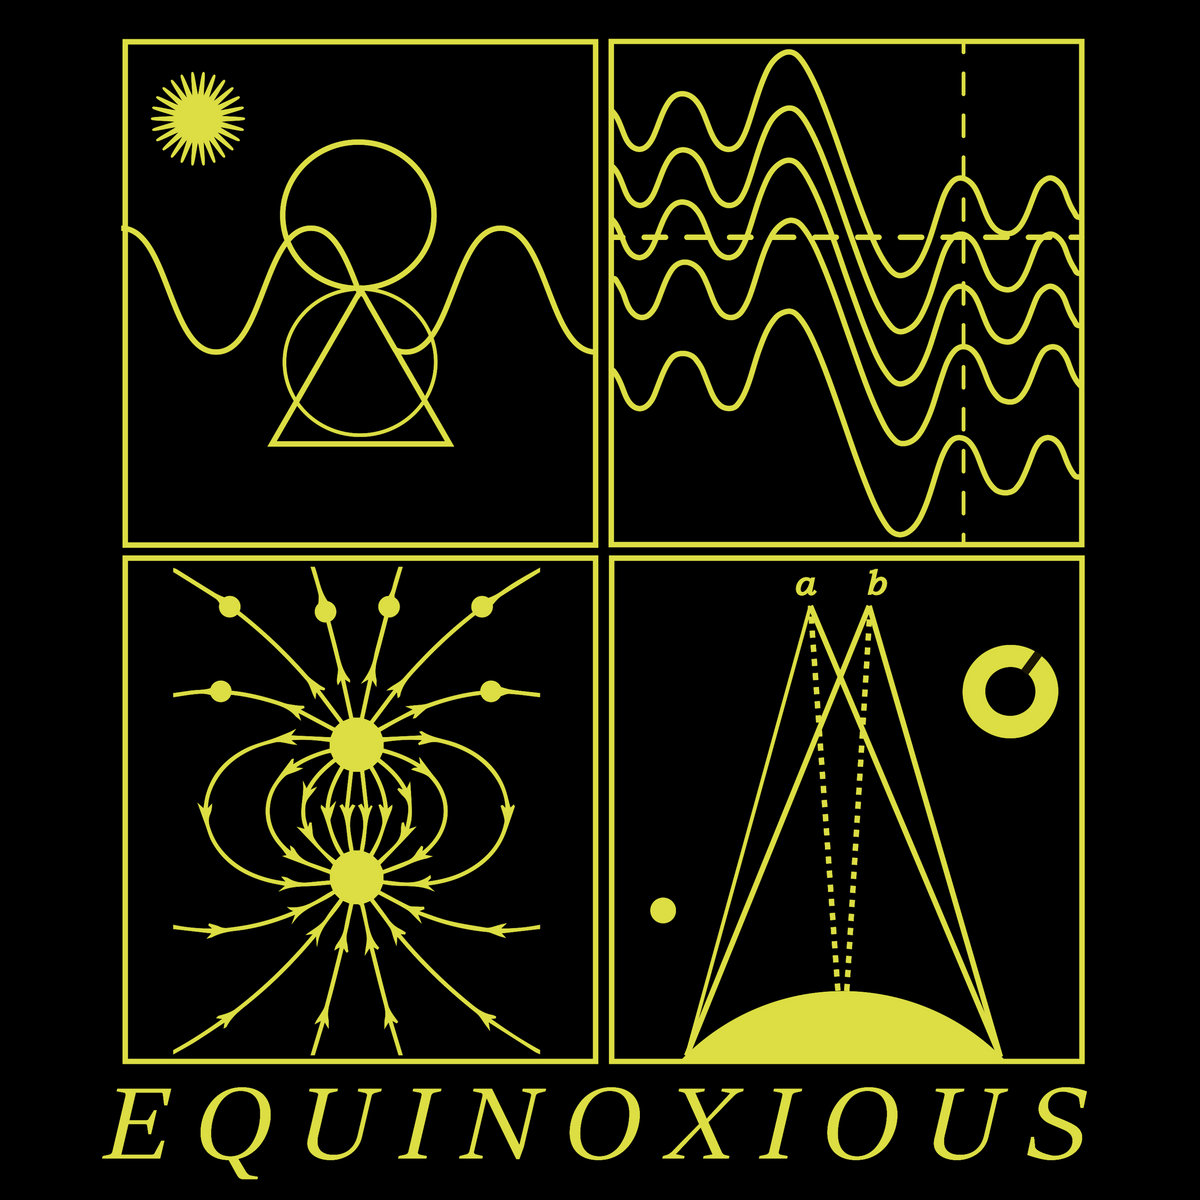 Equinoxious - Celukaos